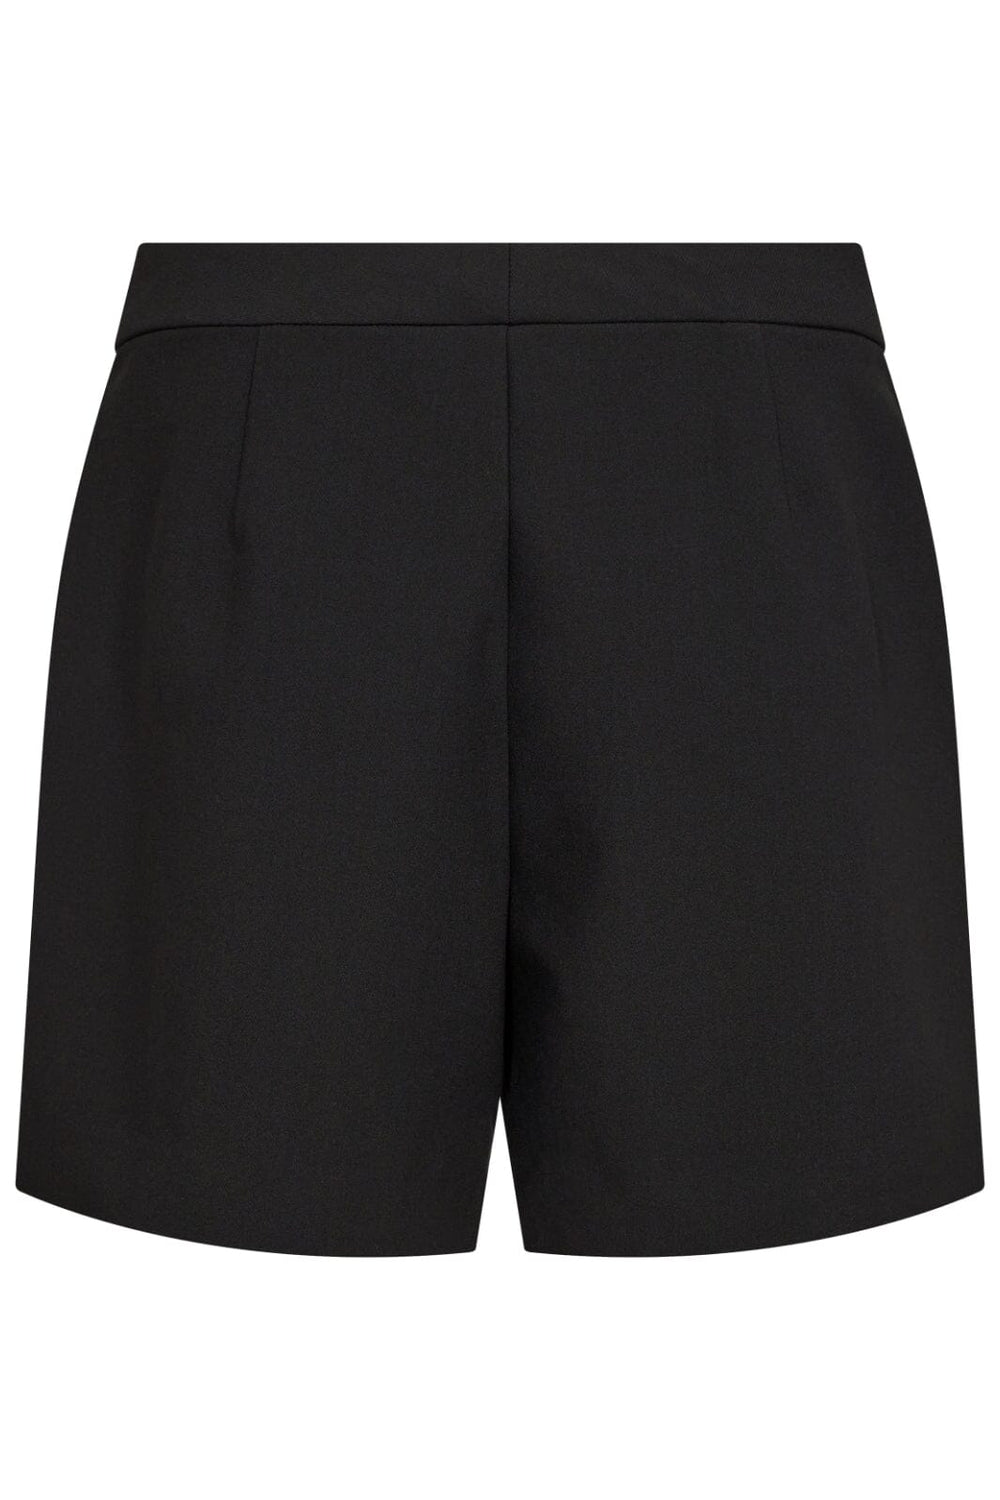 Forudbestilling - Co´couture - Volacc Crop Pleat Shorts 31224 - 96 Black Shorts 